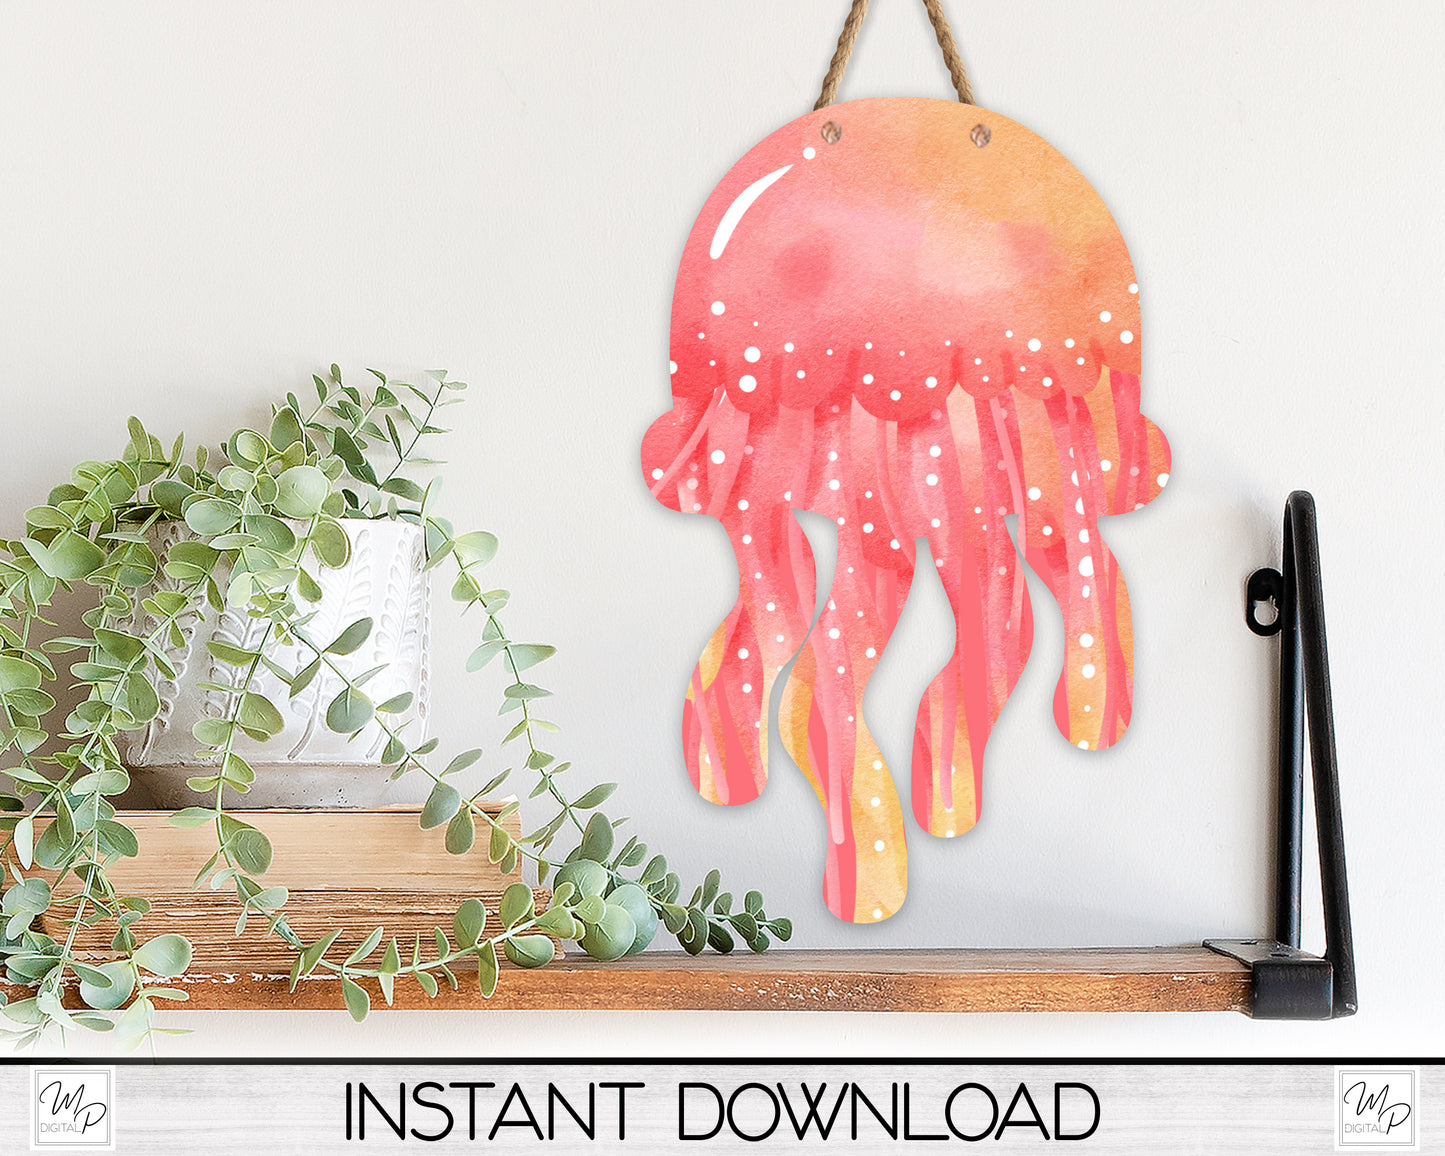 Pink Jellyfish Earring PNG Design for Sublimation, Digital Download